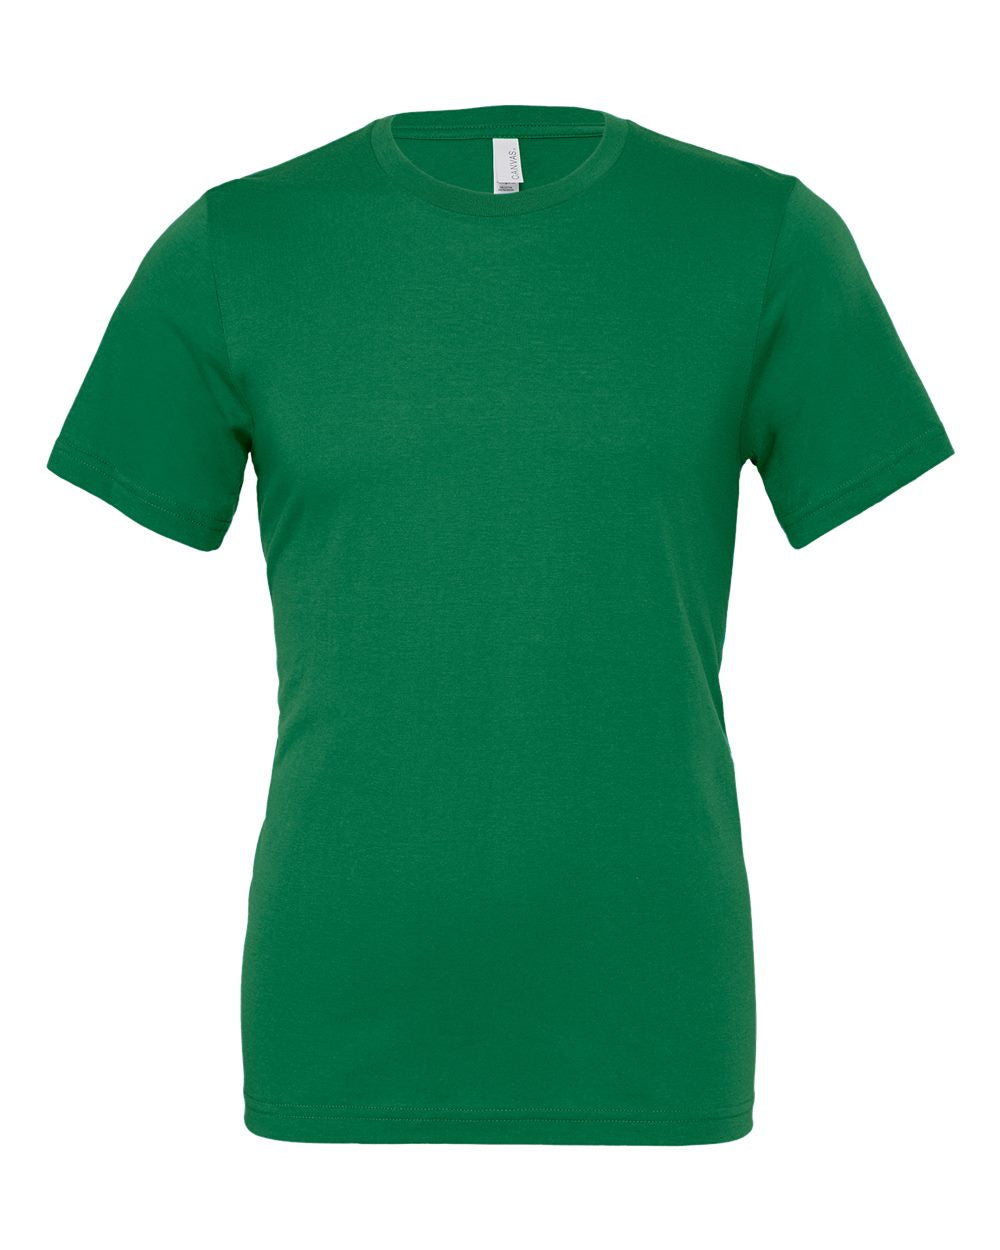 Nutcracker Graphic Short Sleeve T-Shirt